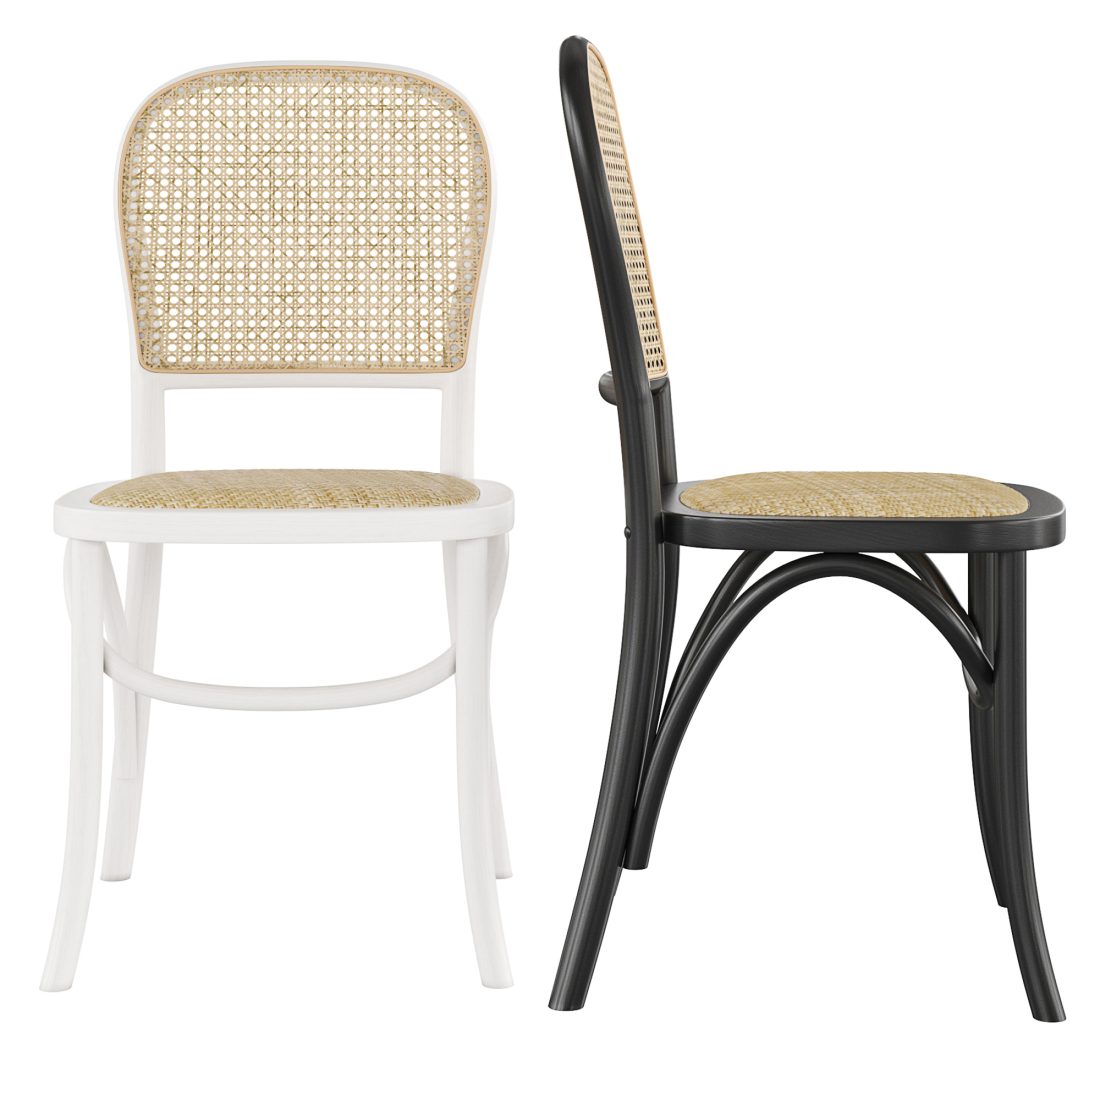 Salsa Rattan & Bentwood Dining Chair Natural